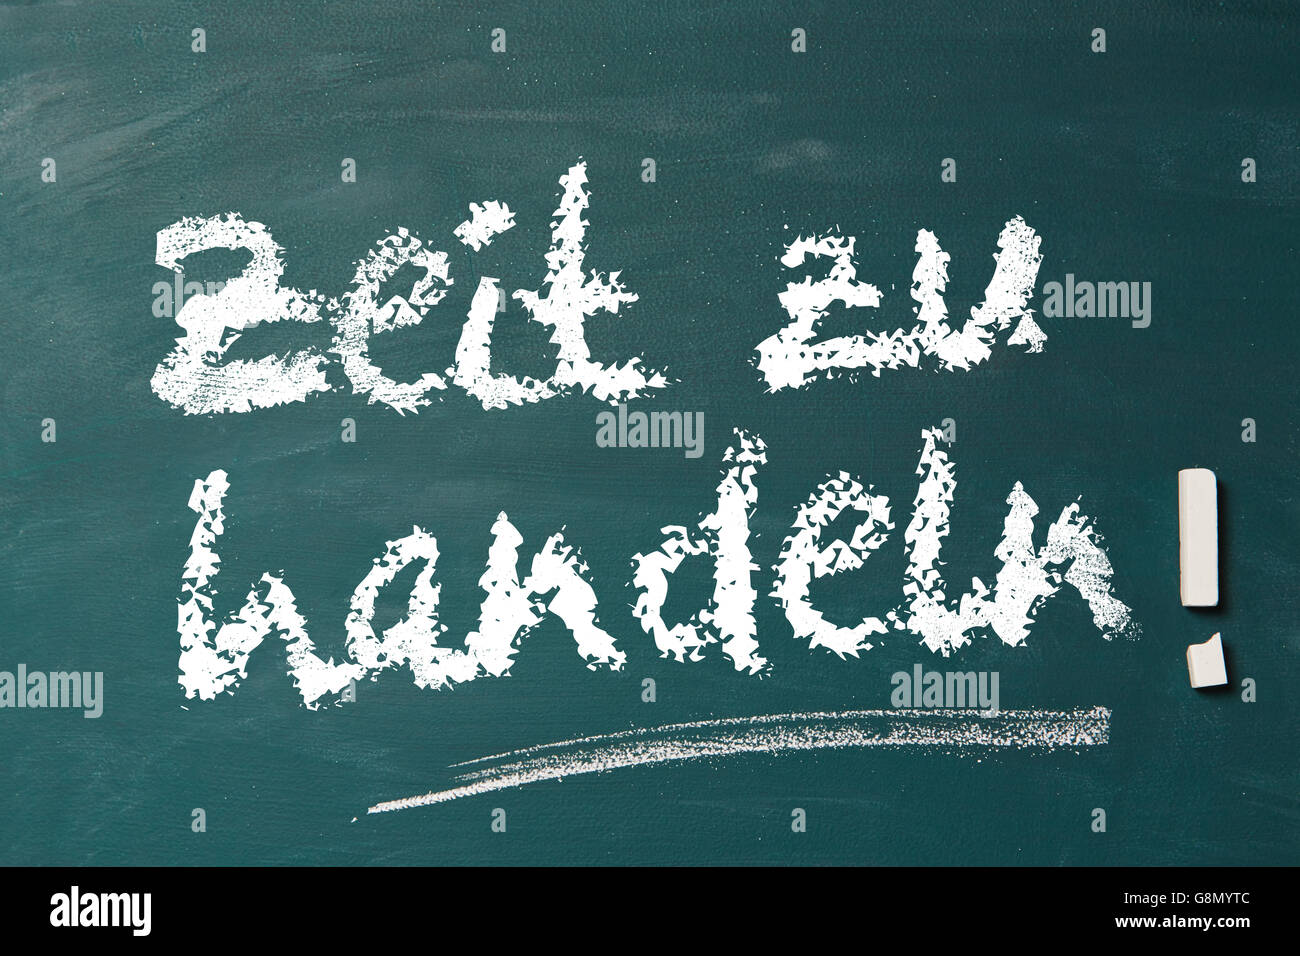 L'expression allemande "Zeit zu handeln !' (il est temps d'agir !) on blackboard Banque D'Images